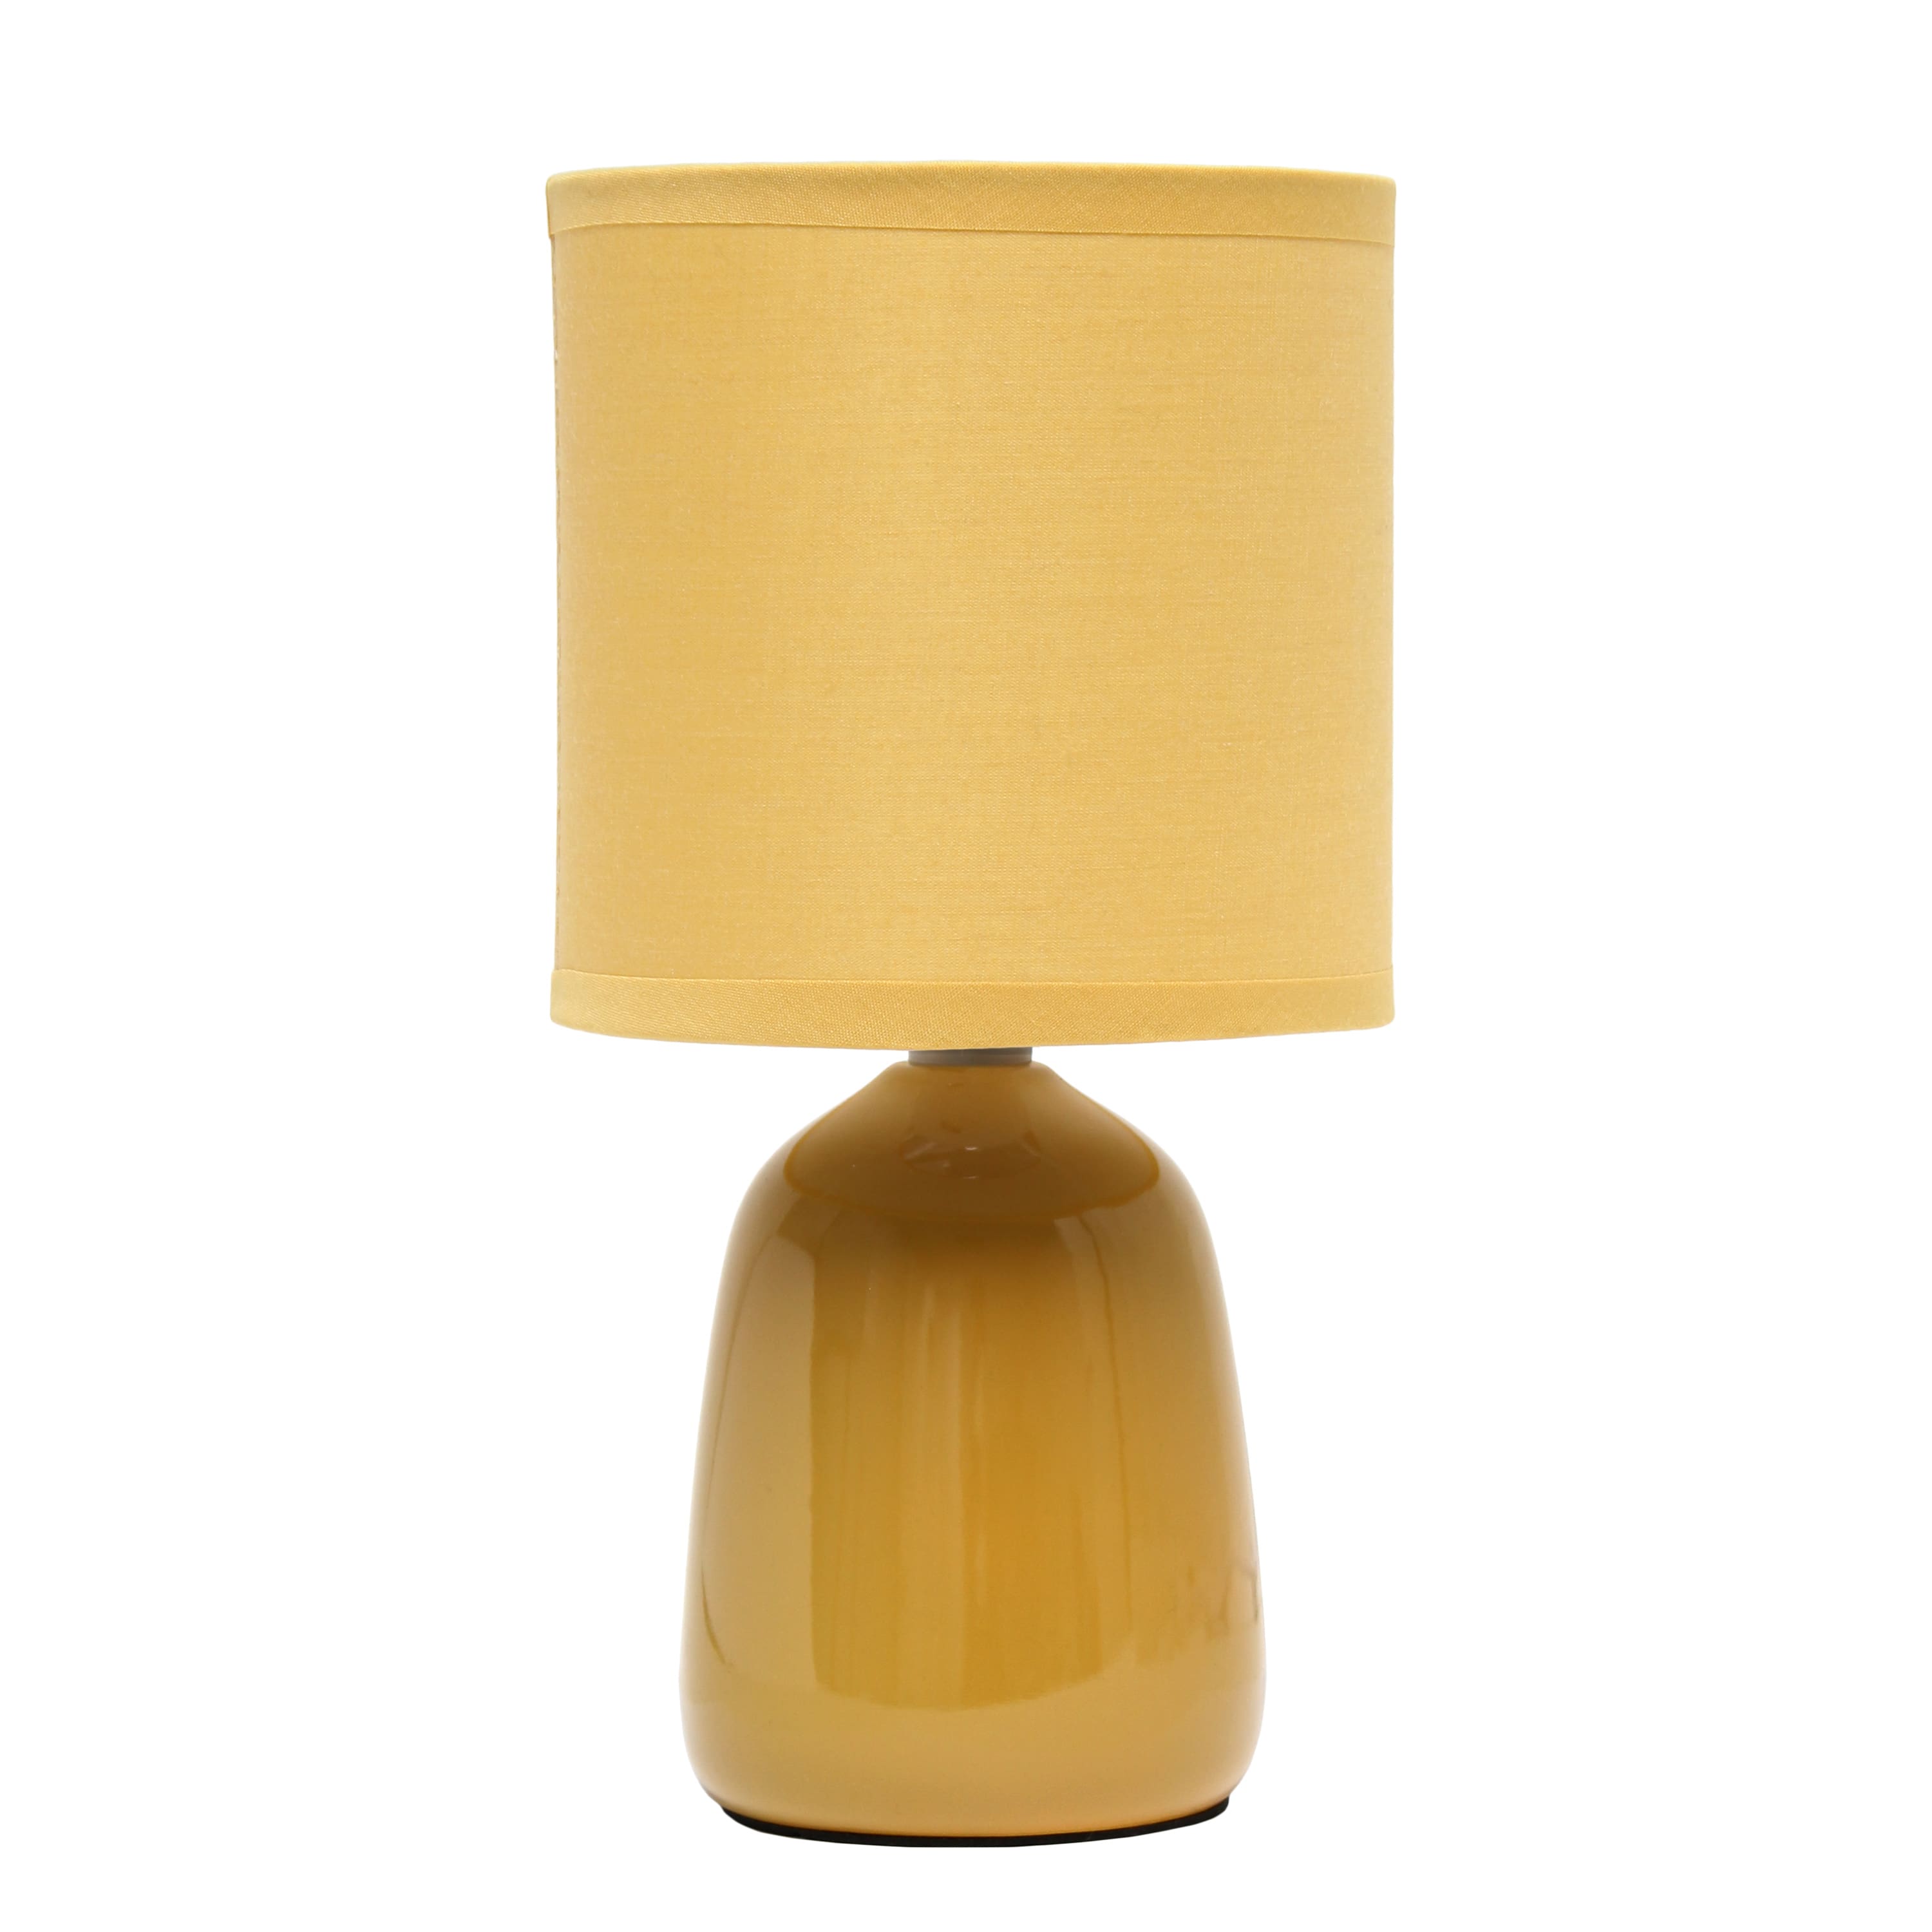 Simple Designs 10" Thimble Base Ceramic Table Lamp